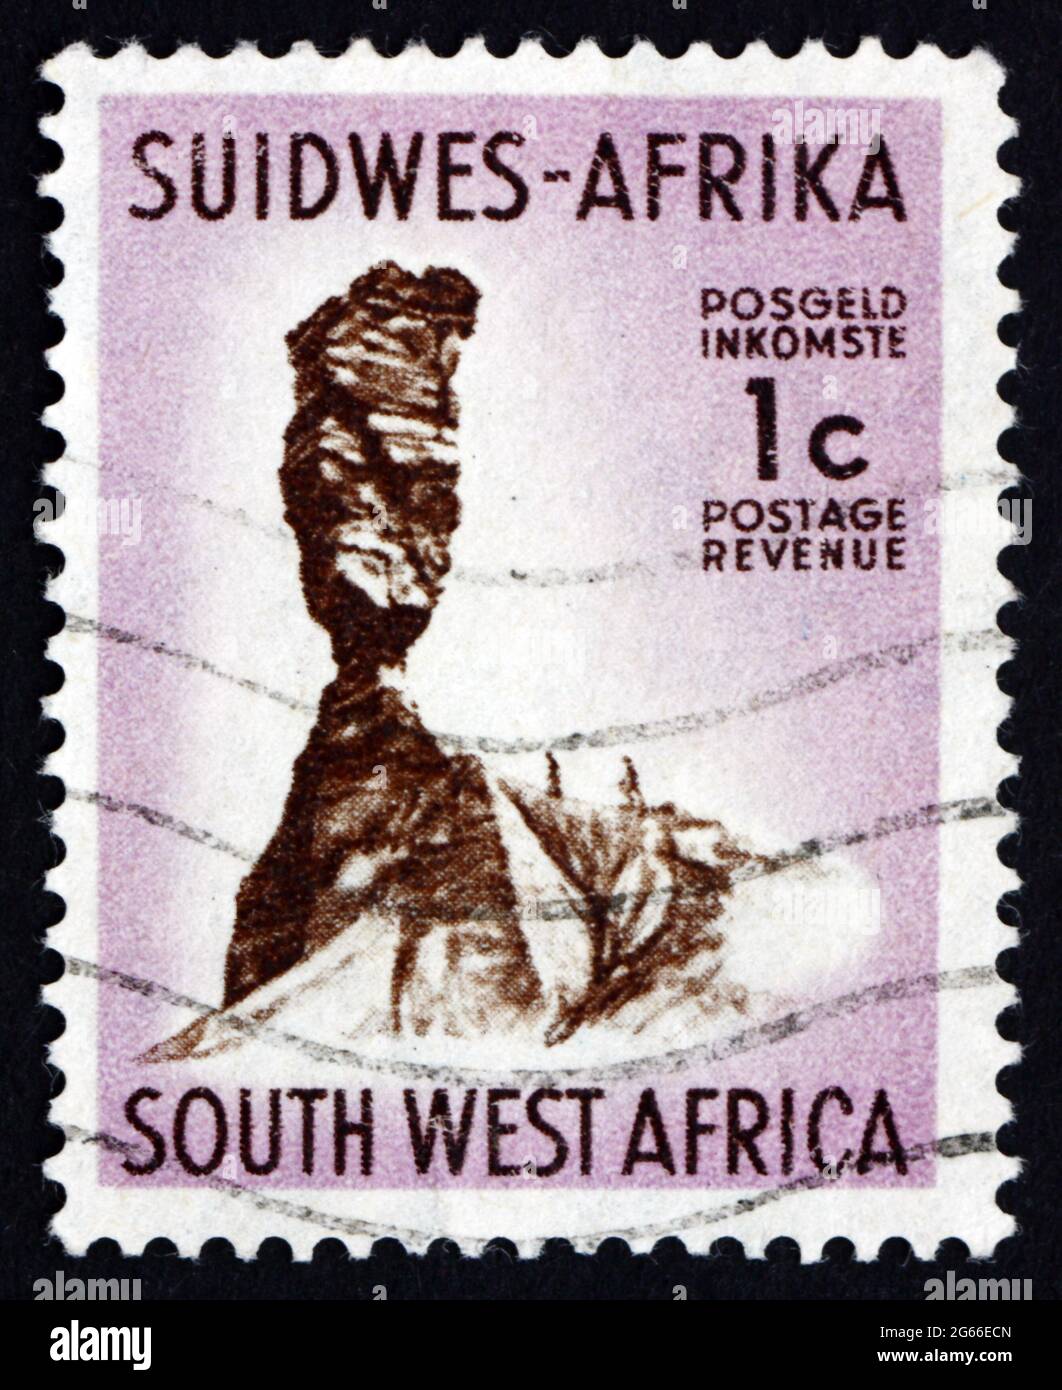 SÜDWESTAFRIKA - CA. 1961: Ein in Südwestafrika gedruckter Stempel zeigt Finger of God Rock, Asab, Sandsteinfelsen in der Namib-Wüste Stockfoto